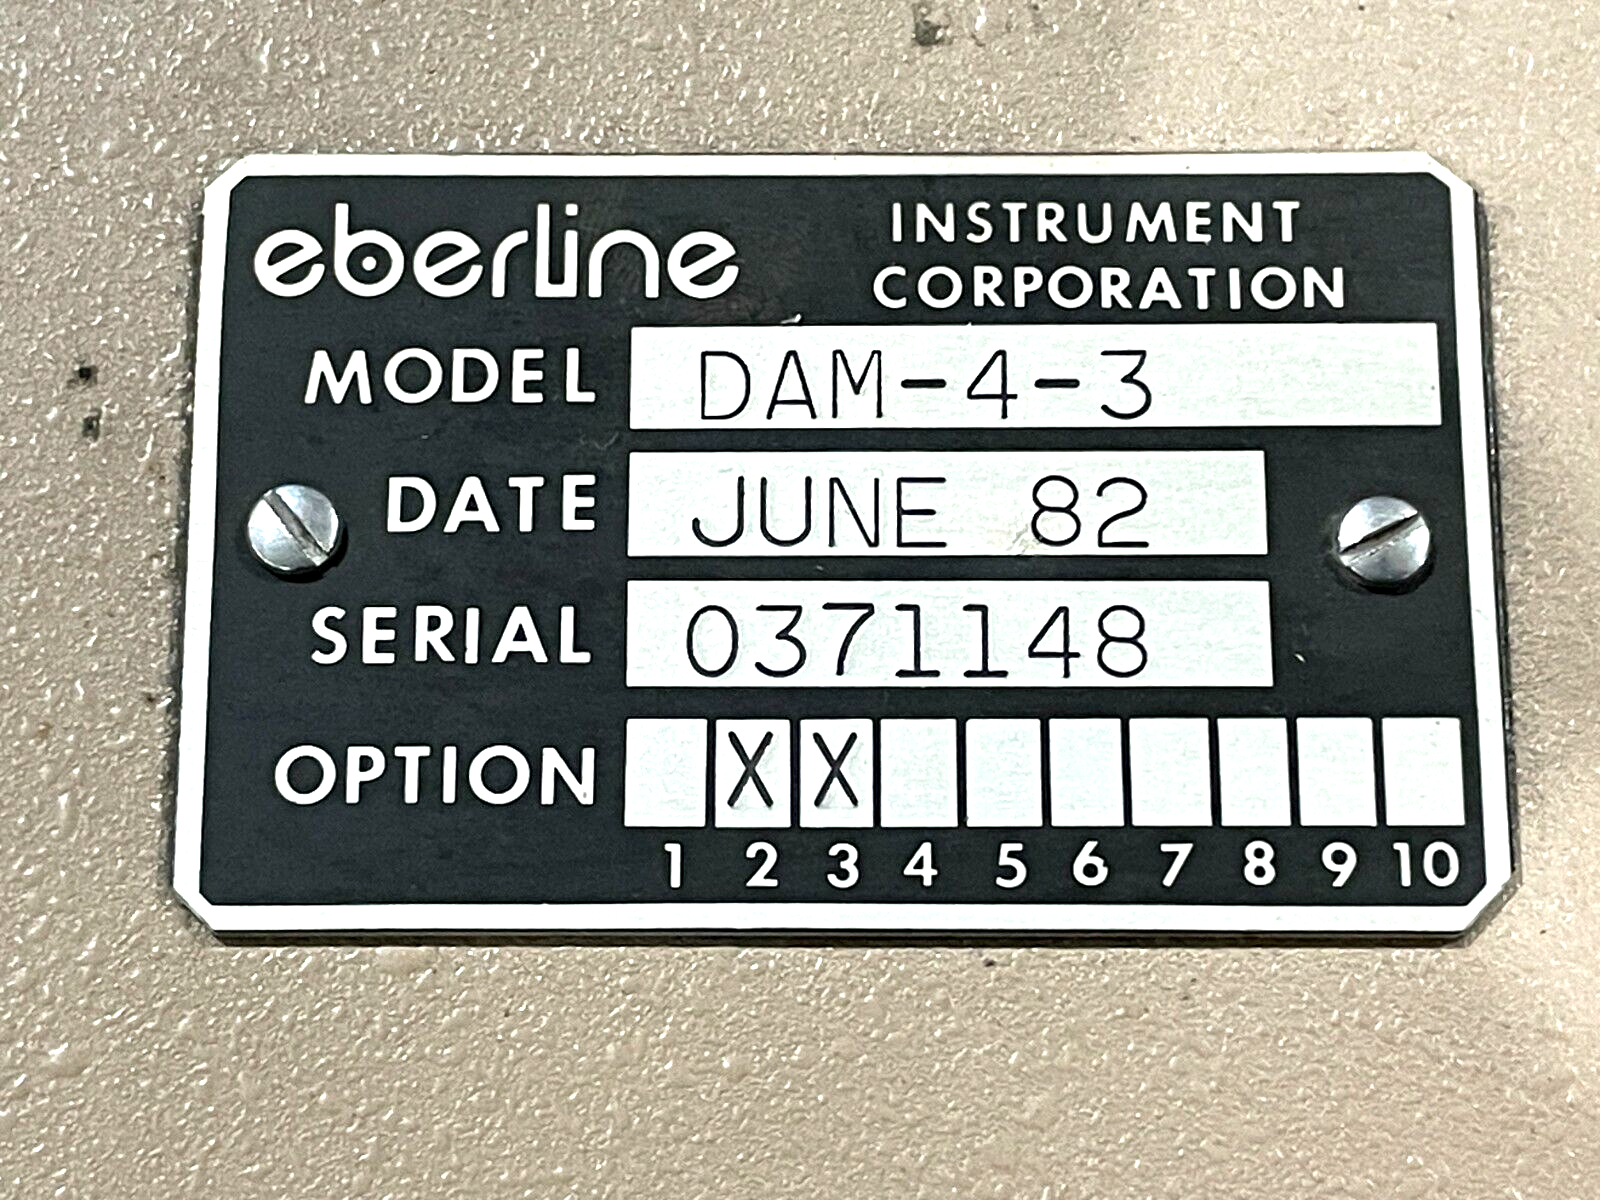 Eberline DAM-4-3 Data Acquisition Microcomputer Controlled Radiation Enclosure